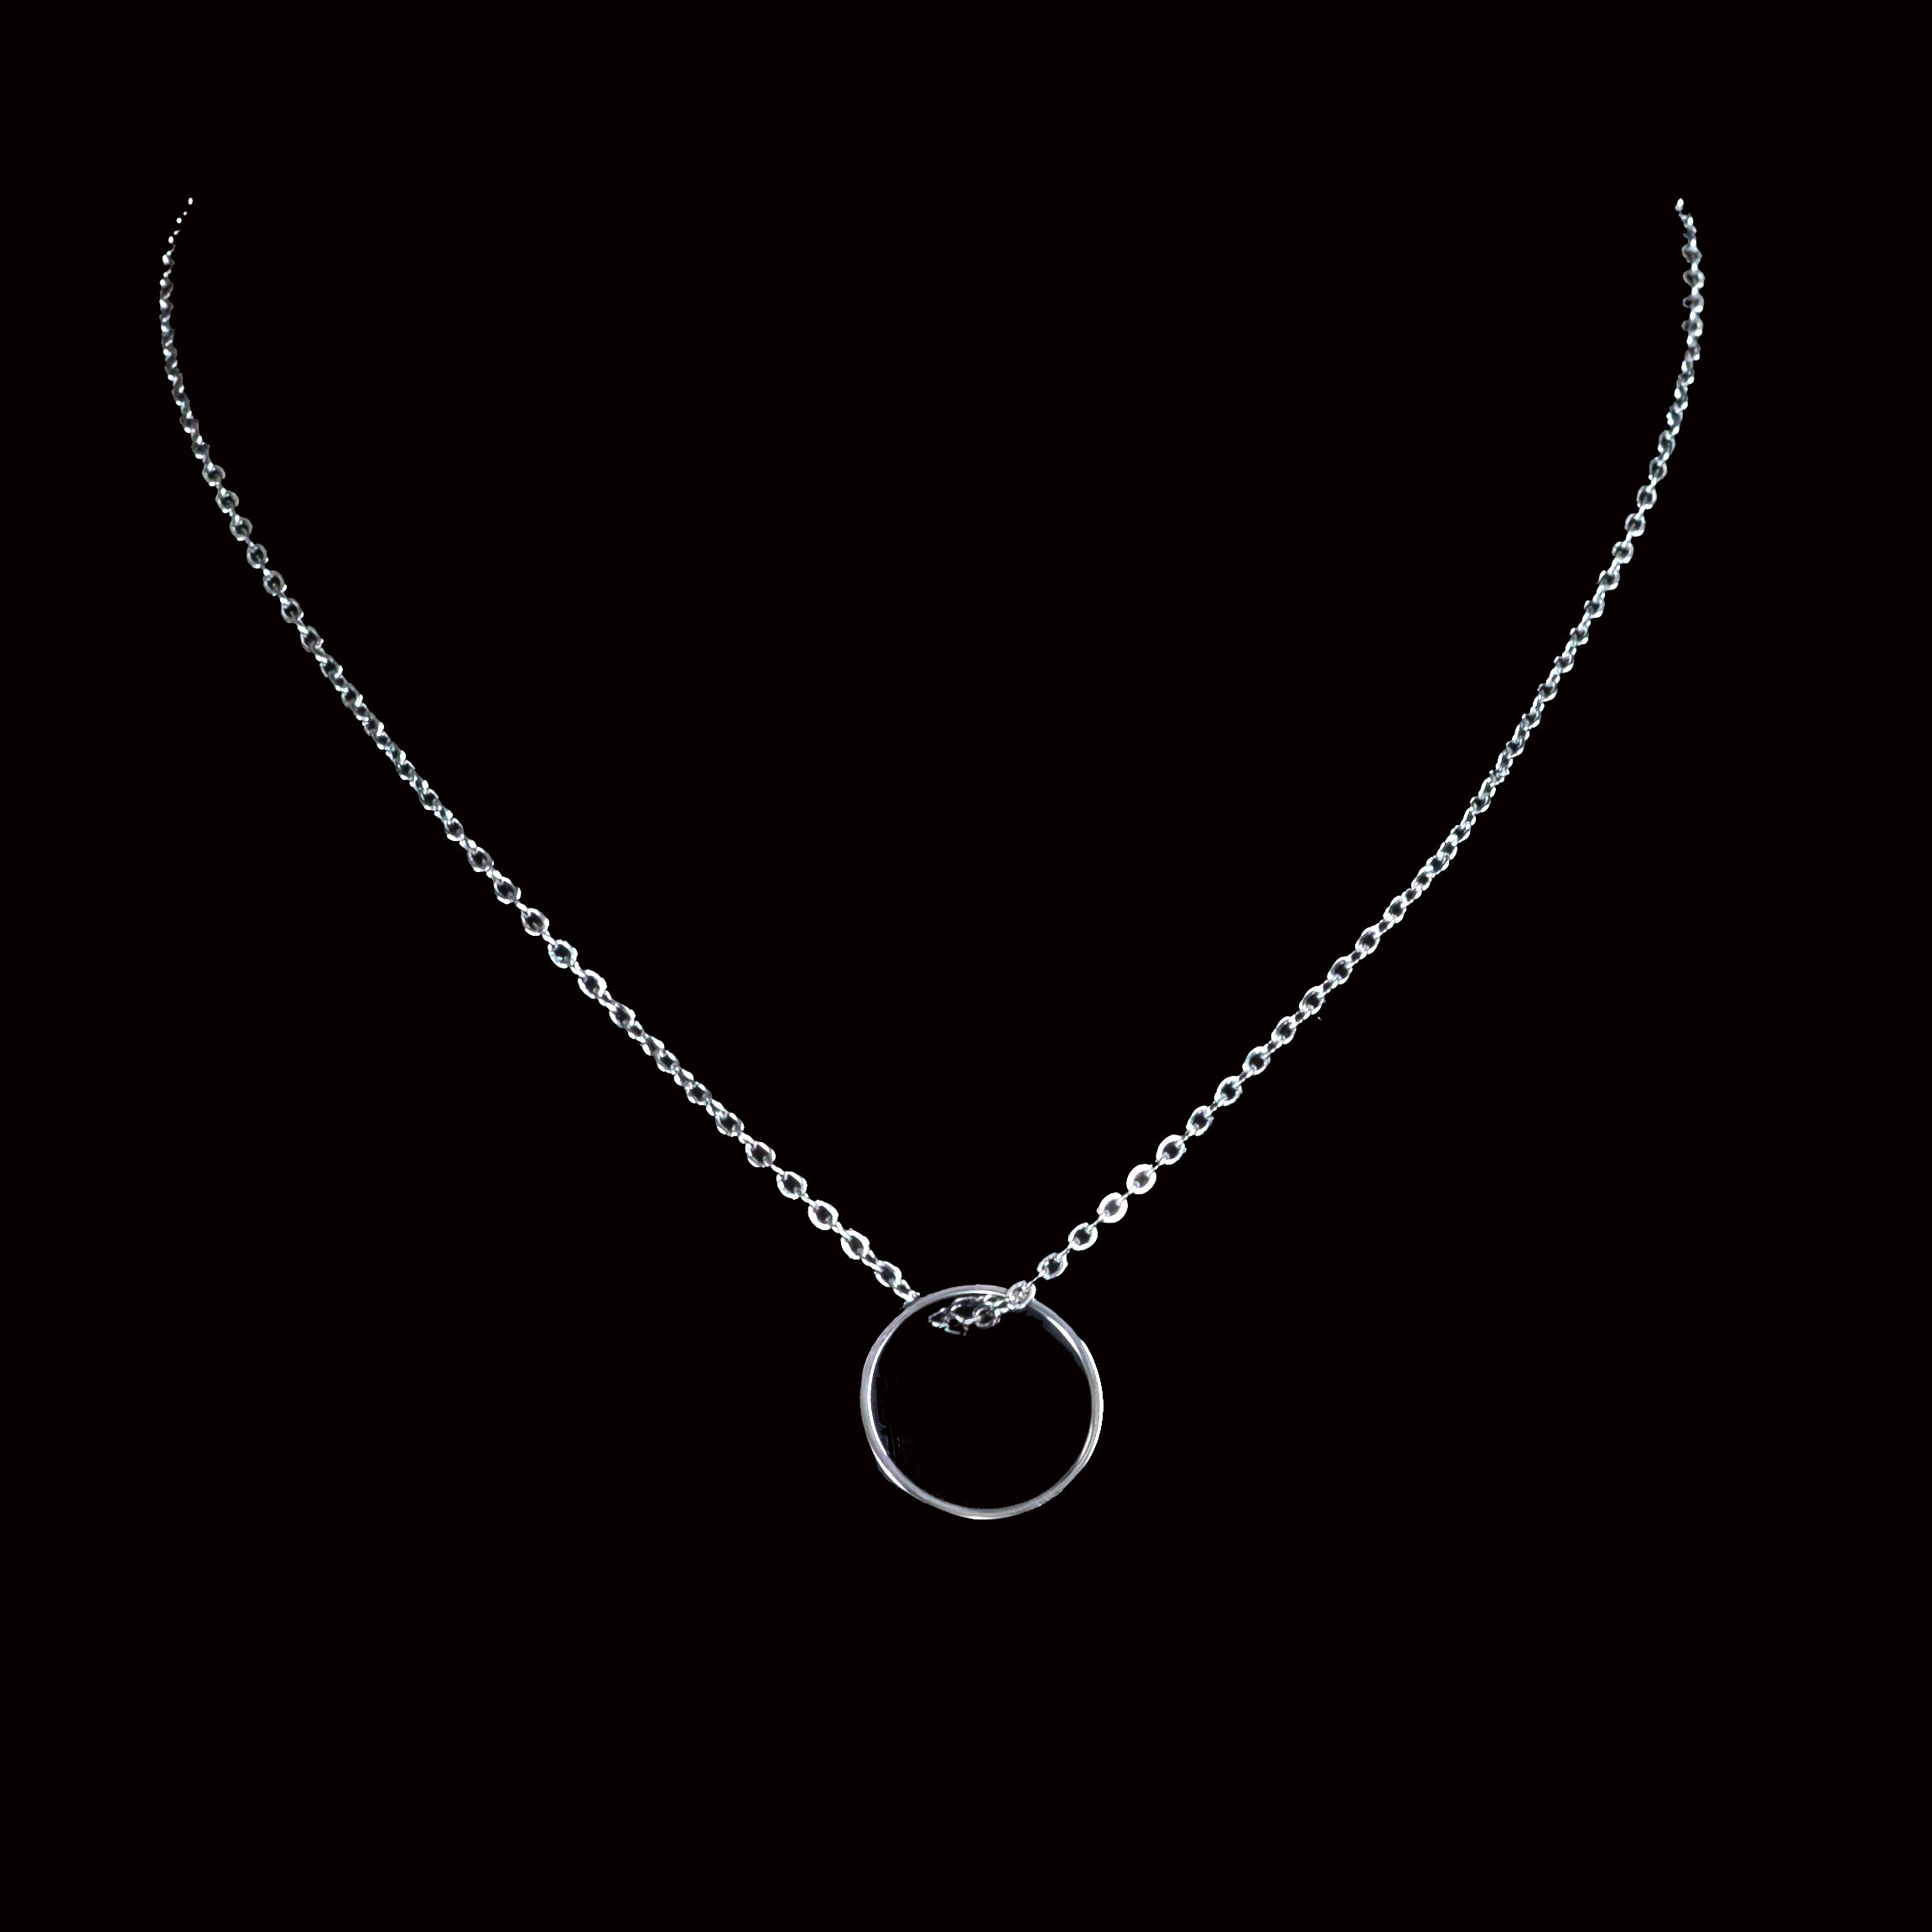 Myles Stainless Steel Necklace with Interlock Pendant